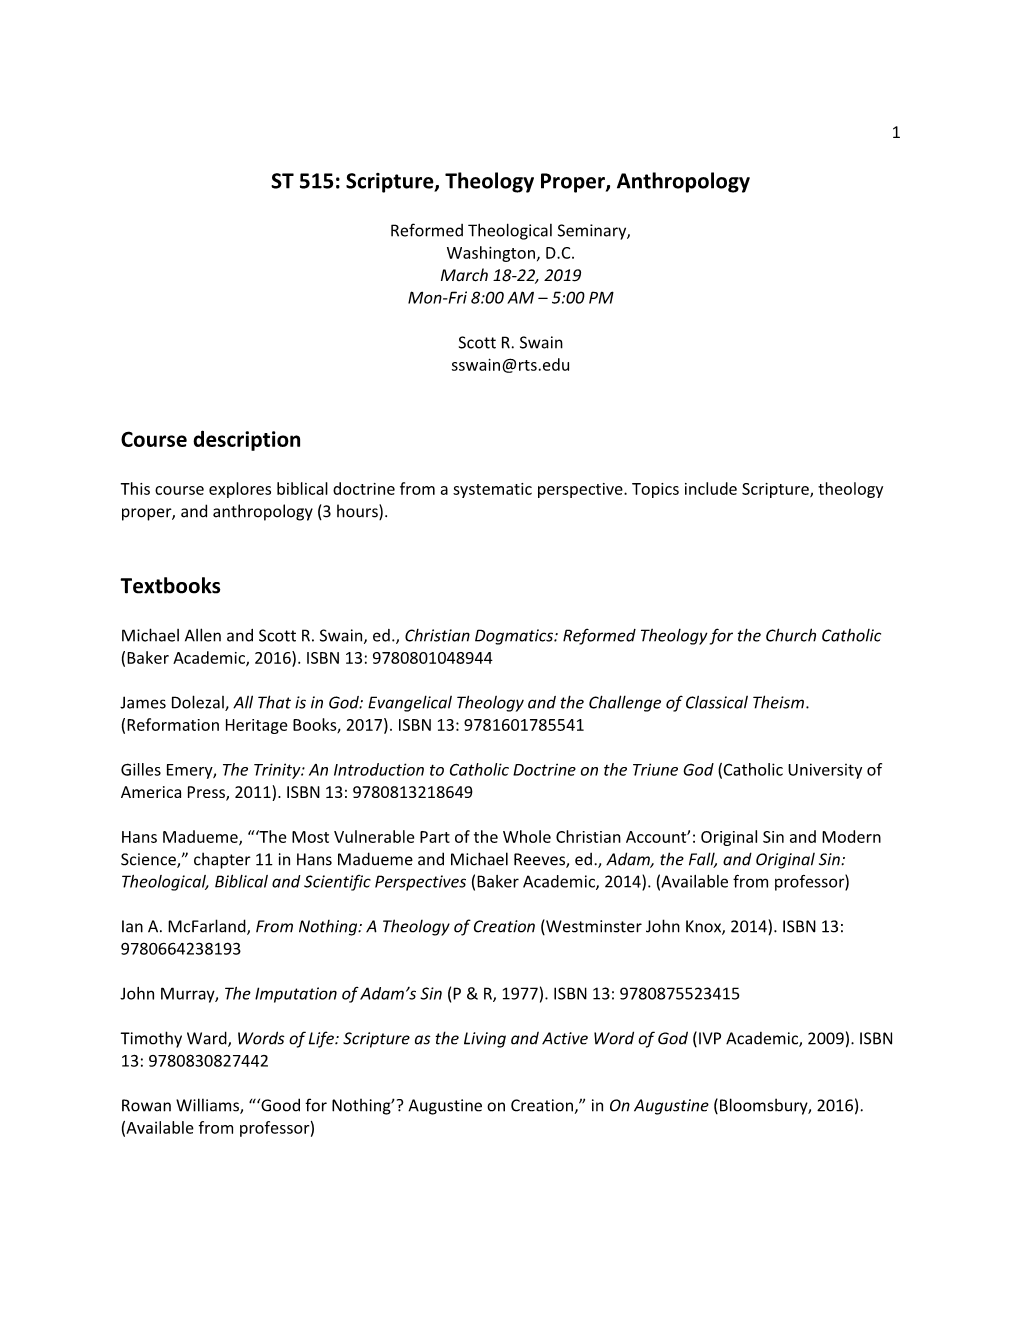 ST 515: Scripture, Theology Proper, Anthropology Course Description